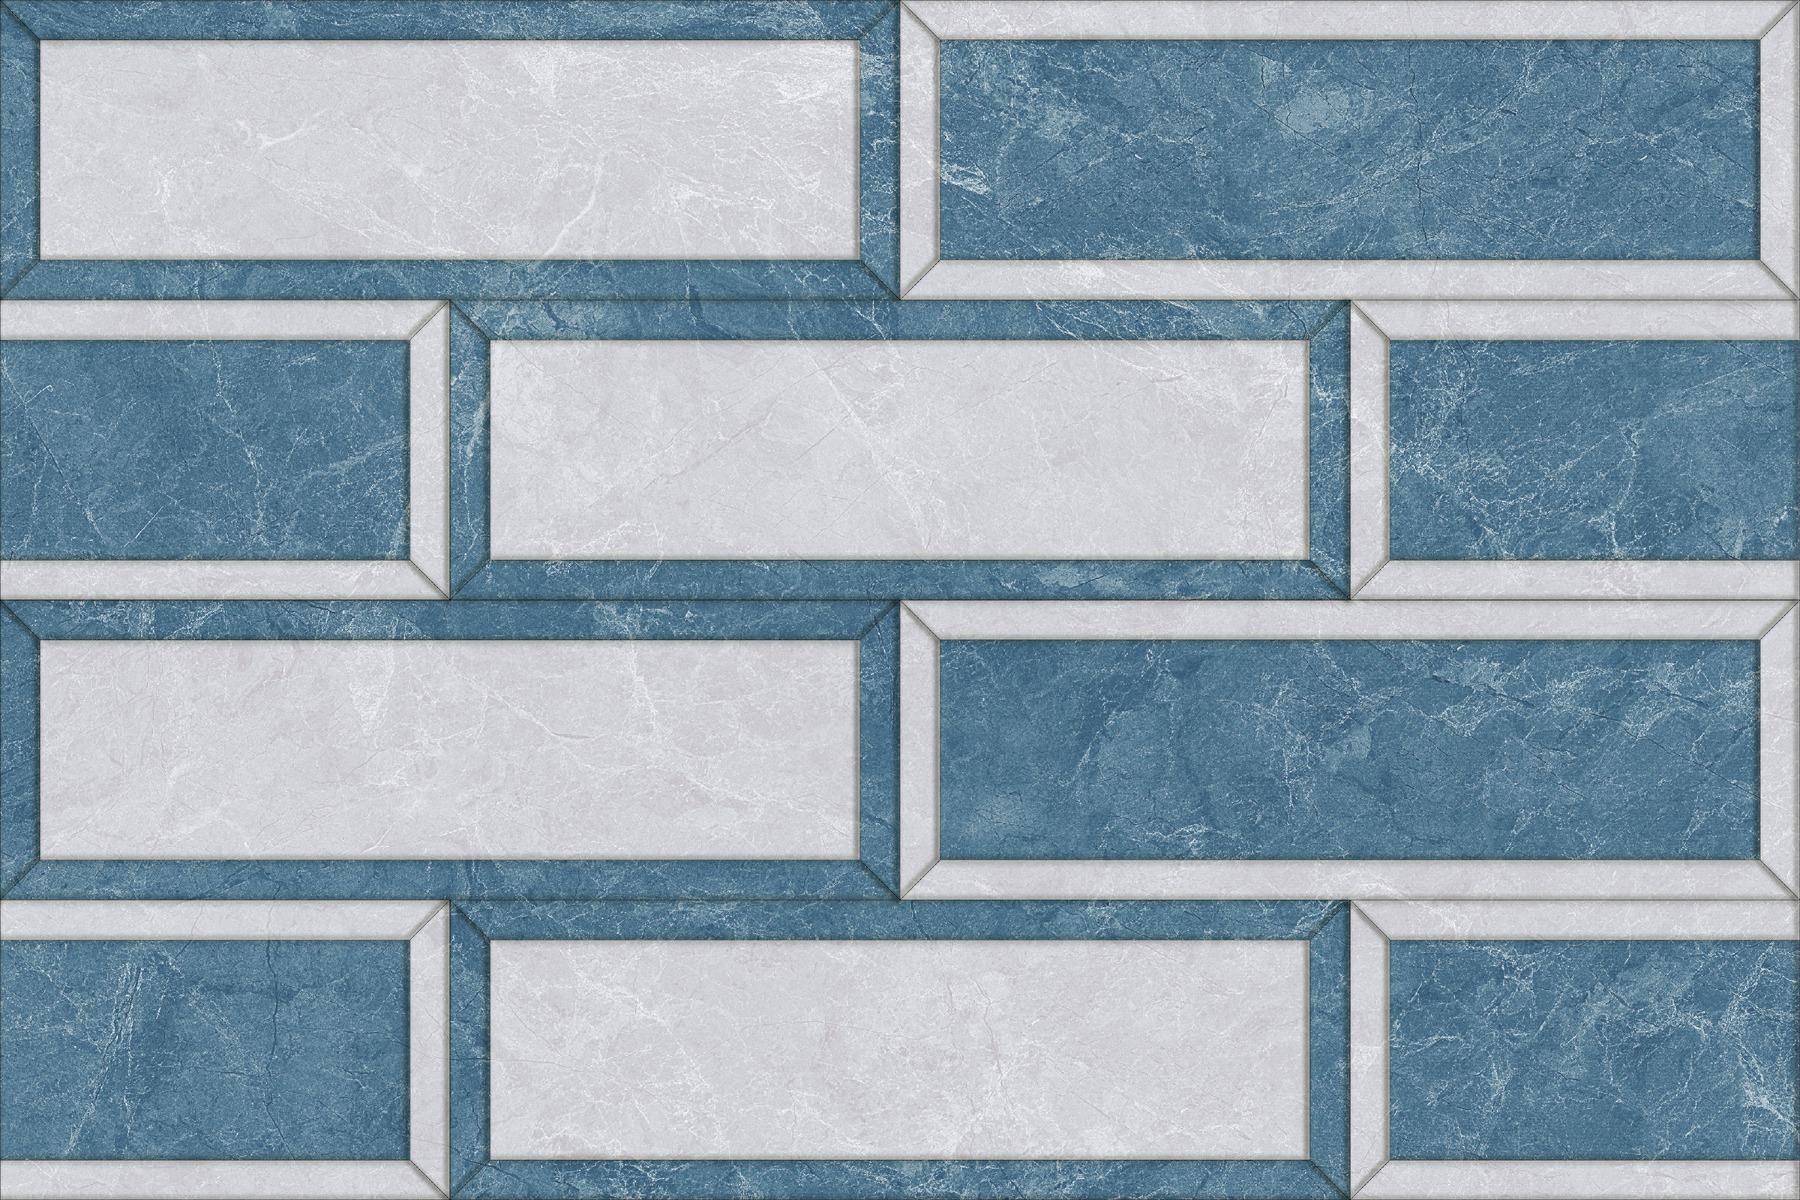 All Tiles for Bathroom Tiles, Living Room Tiles, Accent Tiles